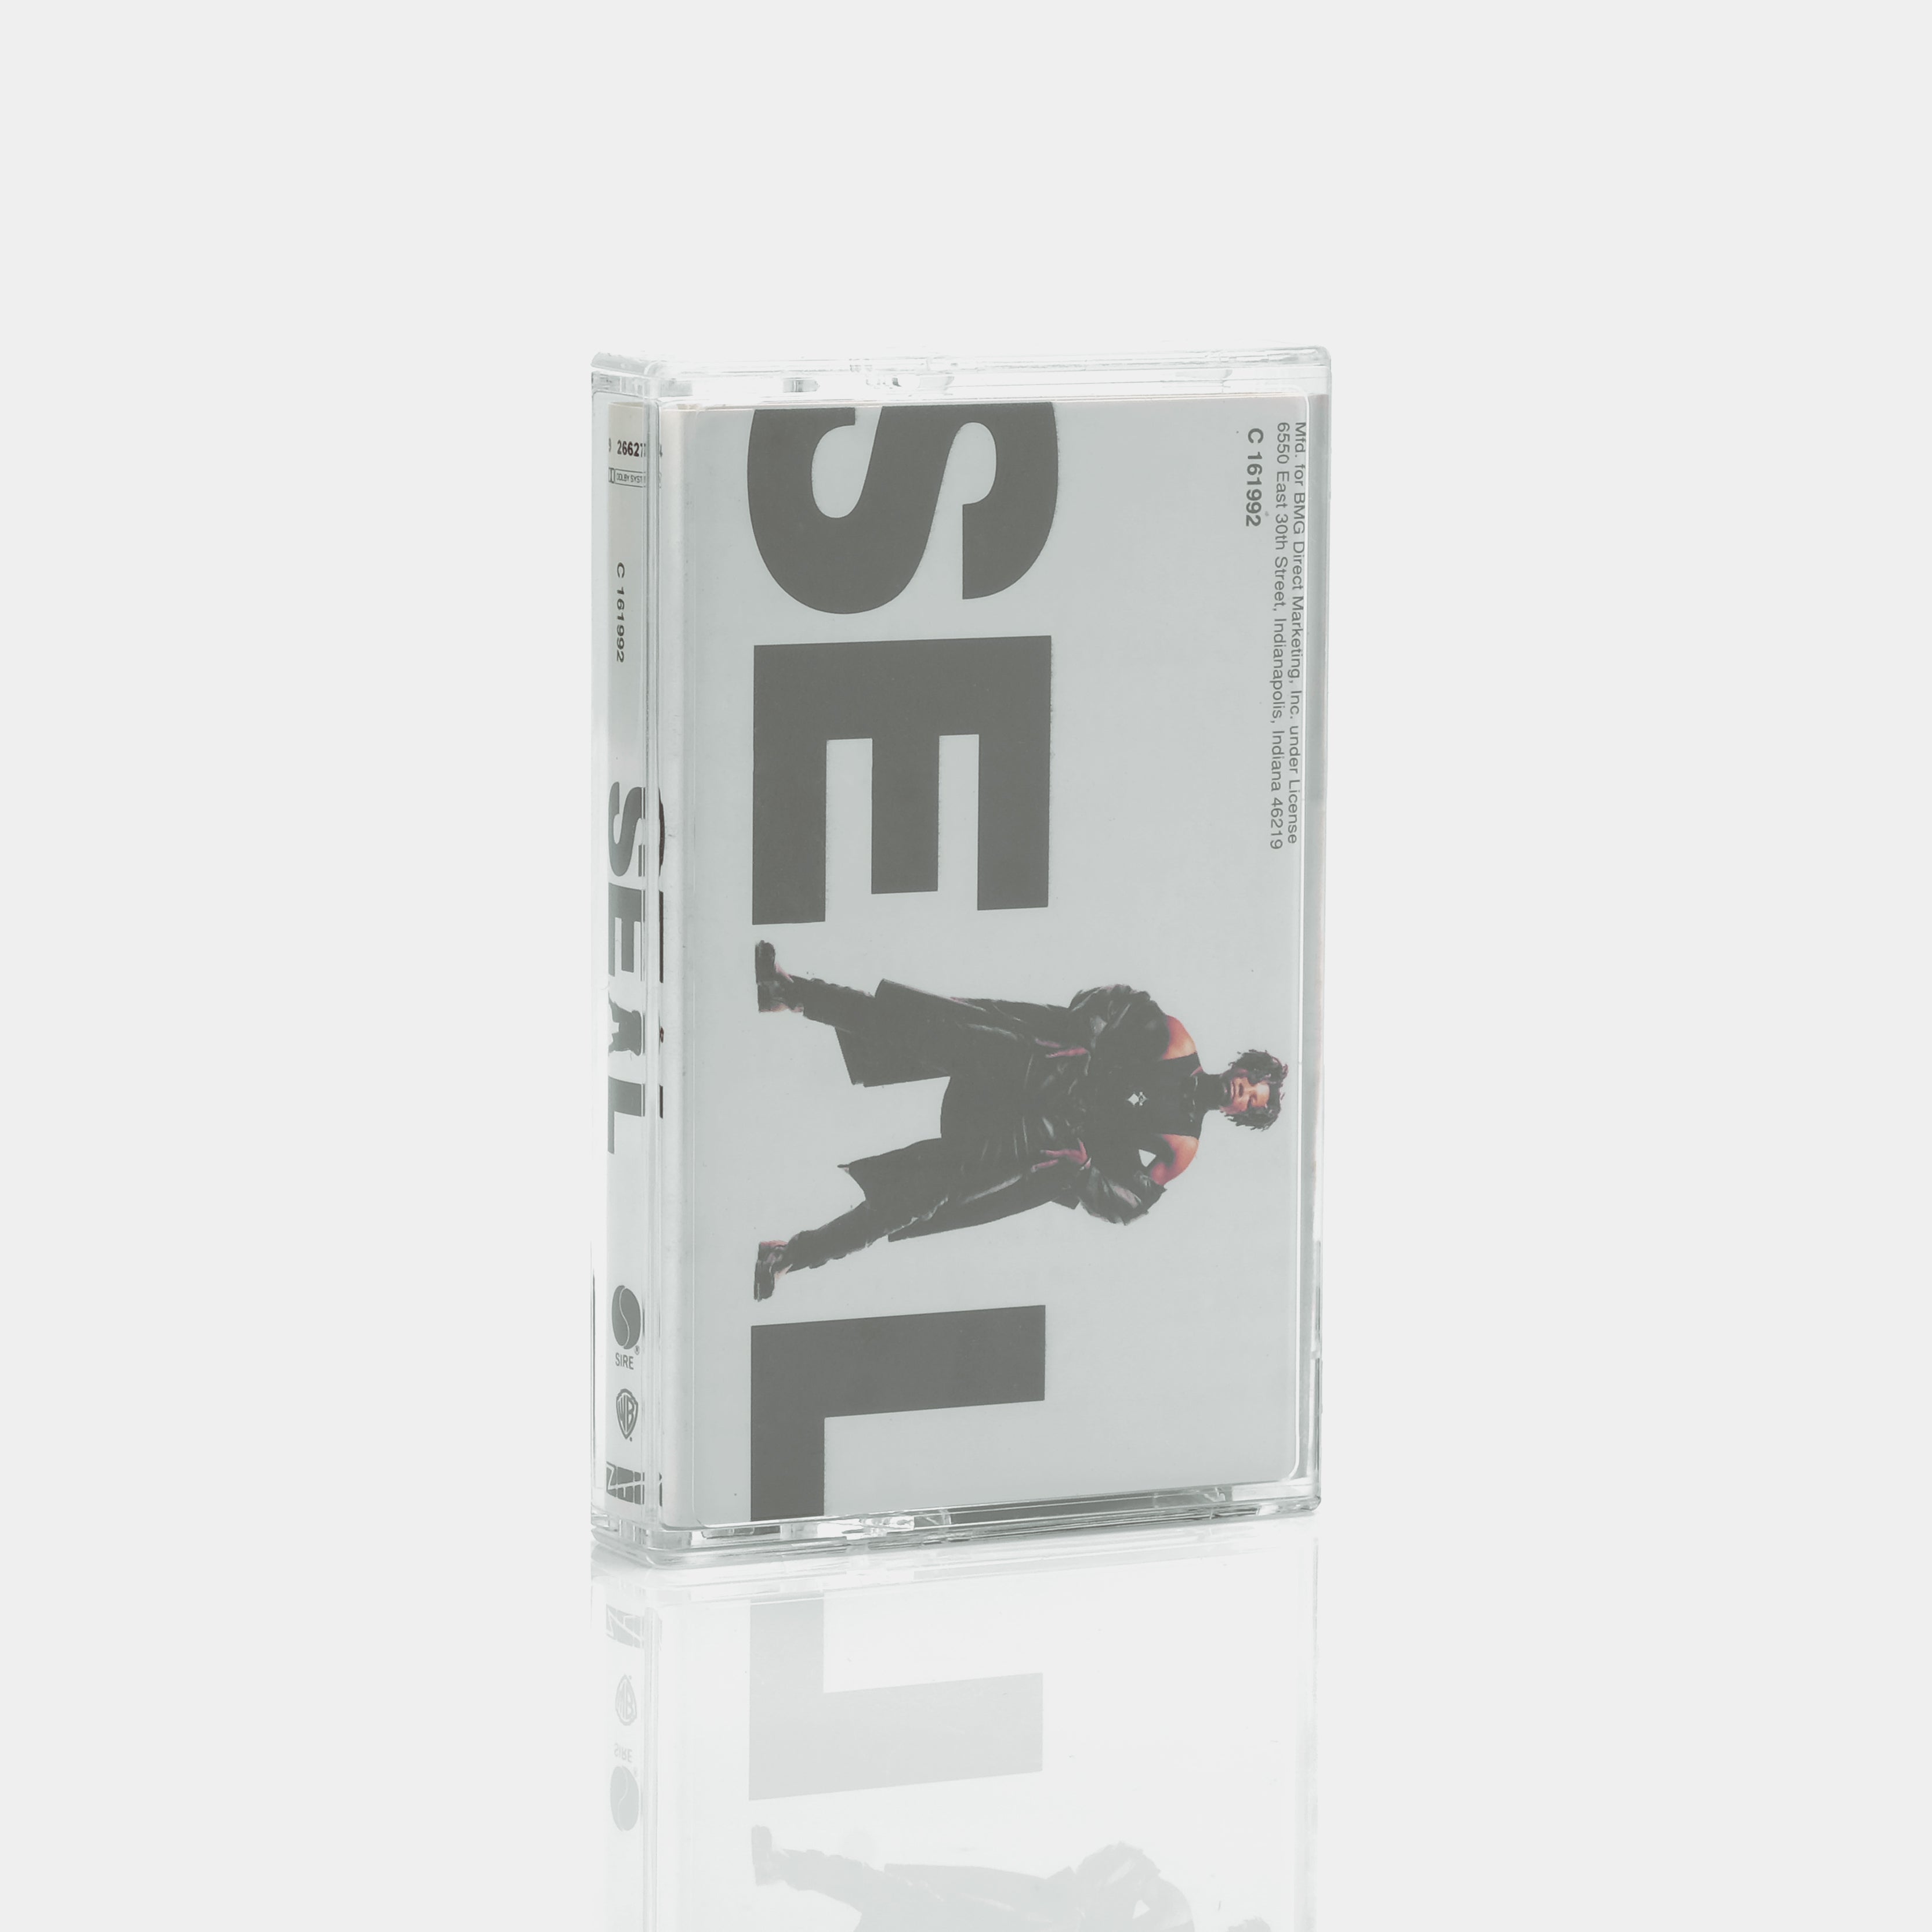 Seal - Seal Cassette Tape